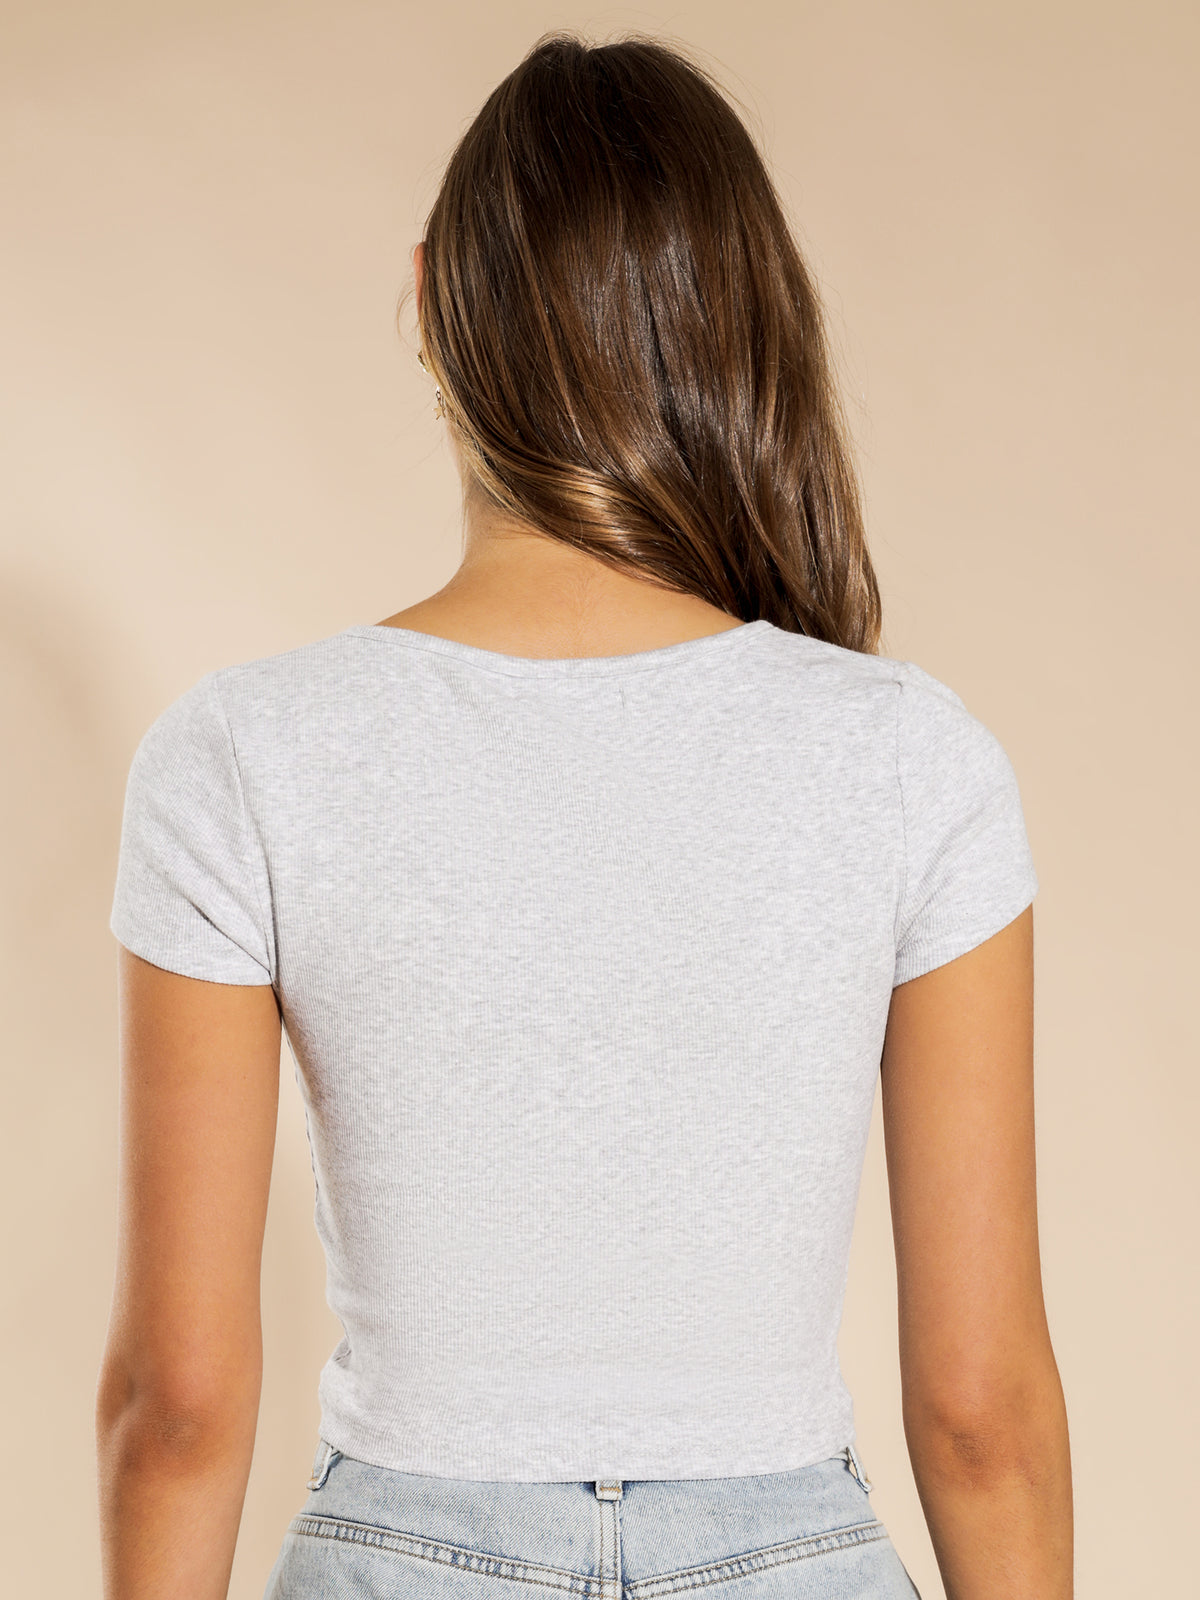 Tina Notch Front T-Shirt in Grey Marle